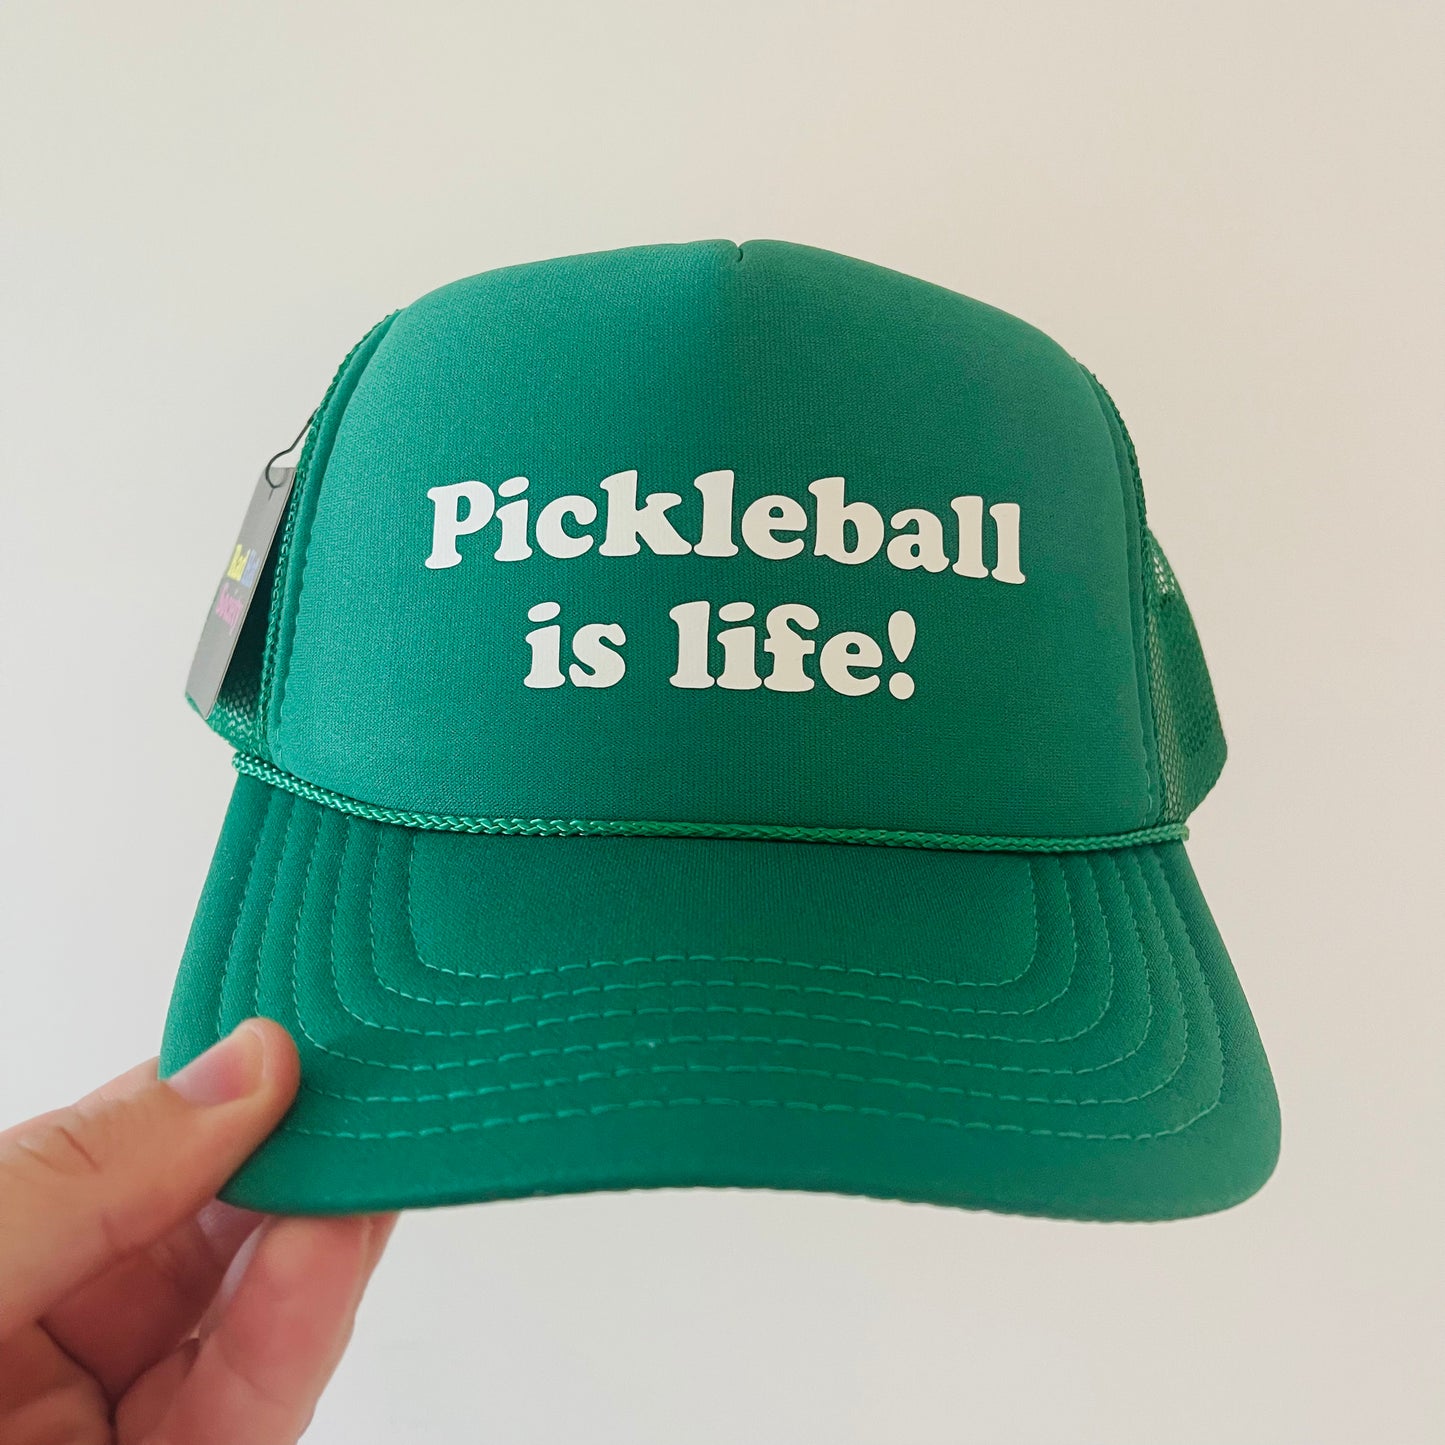 Pickleball is life!